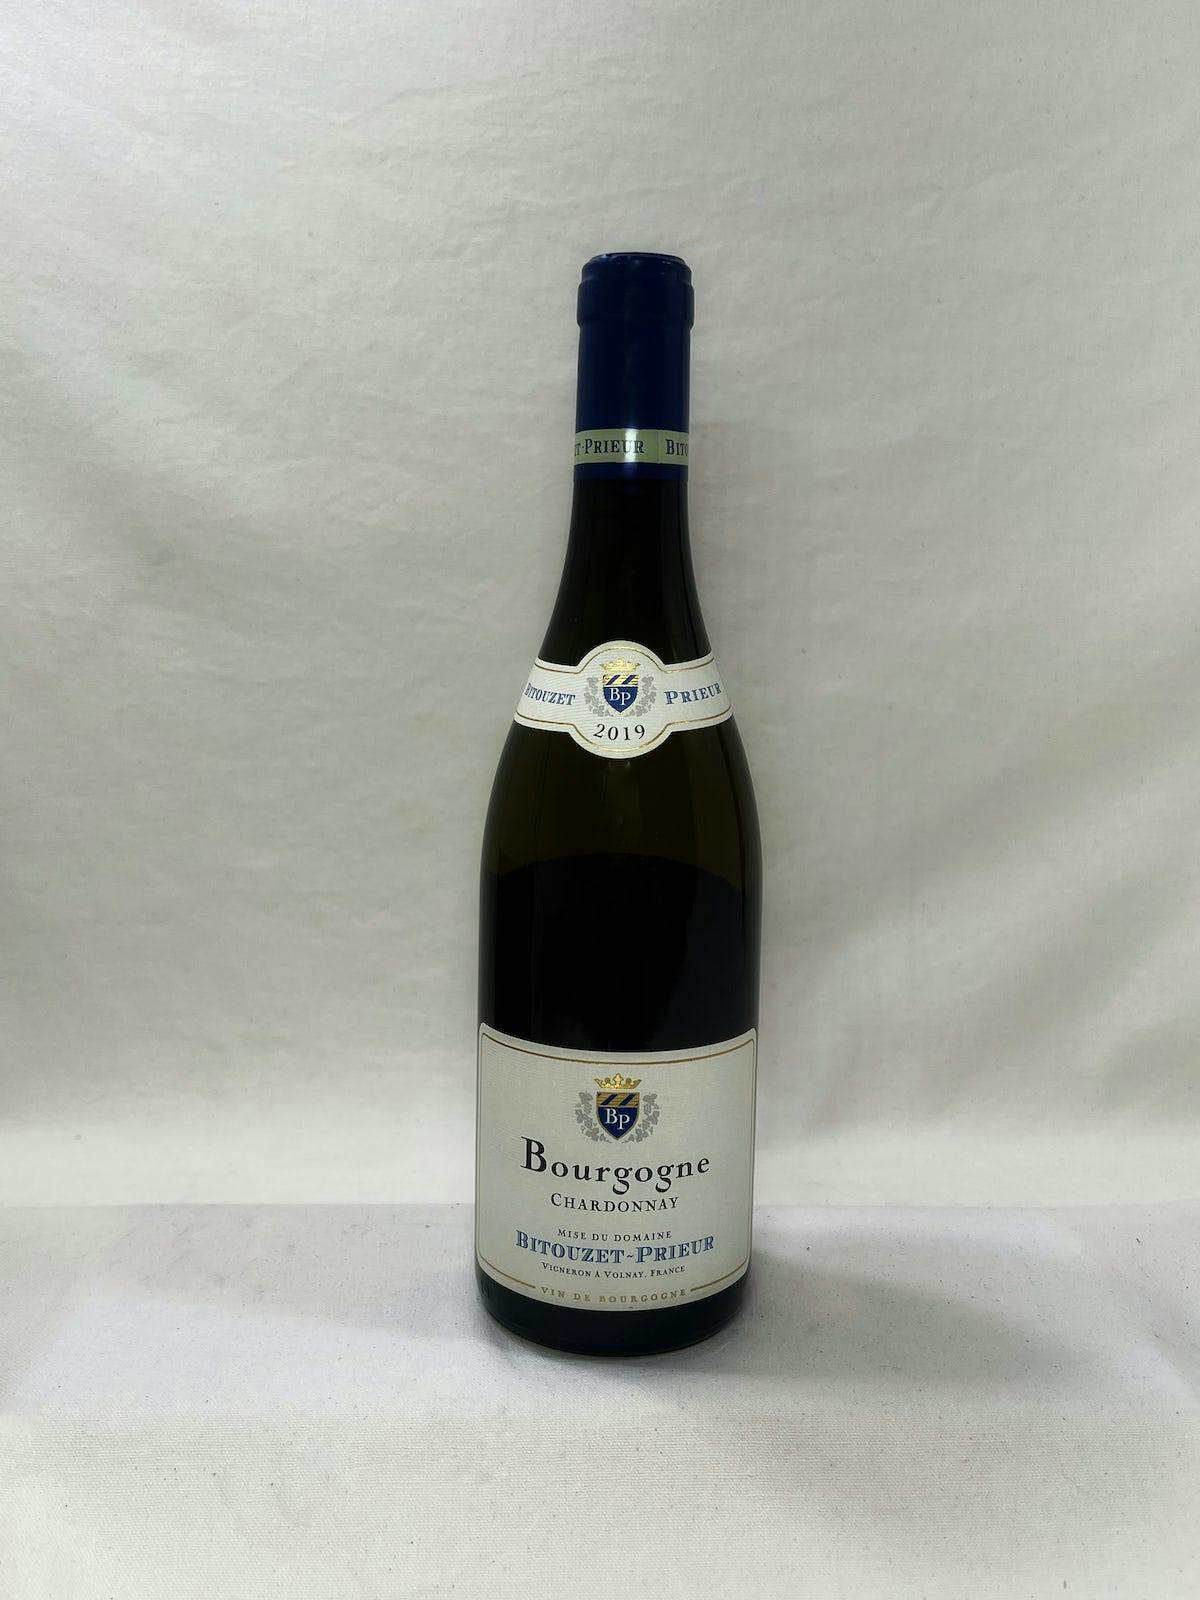 Bitouzet-Prieur, Bourgogne Blanc  2019 750ml